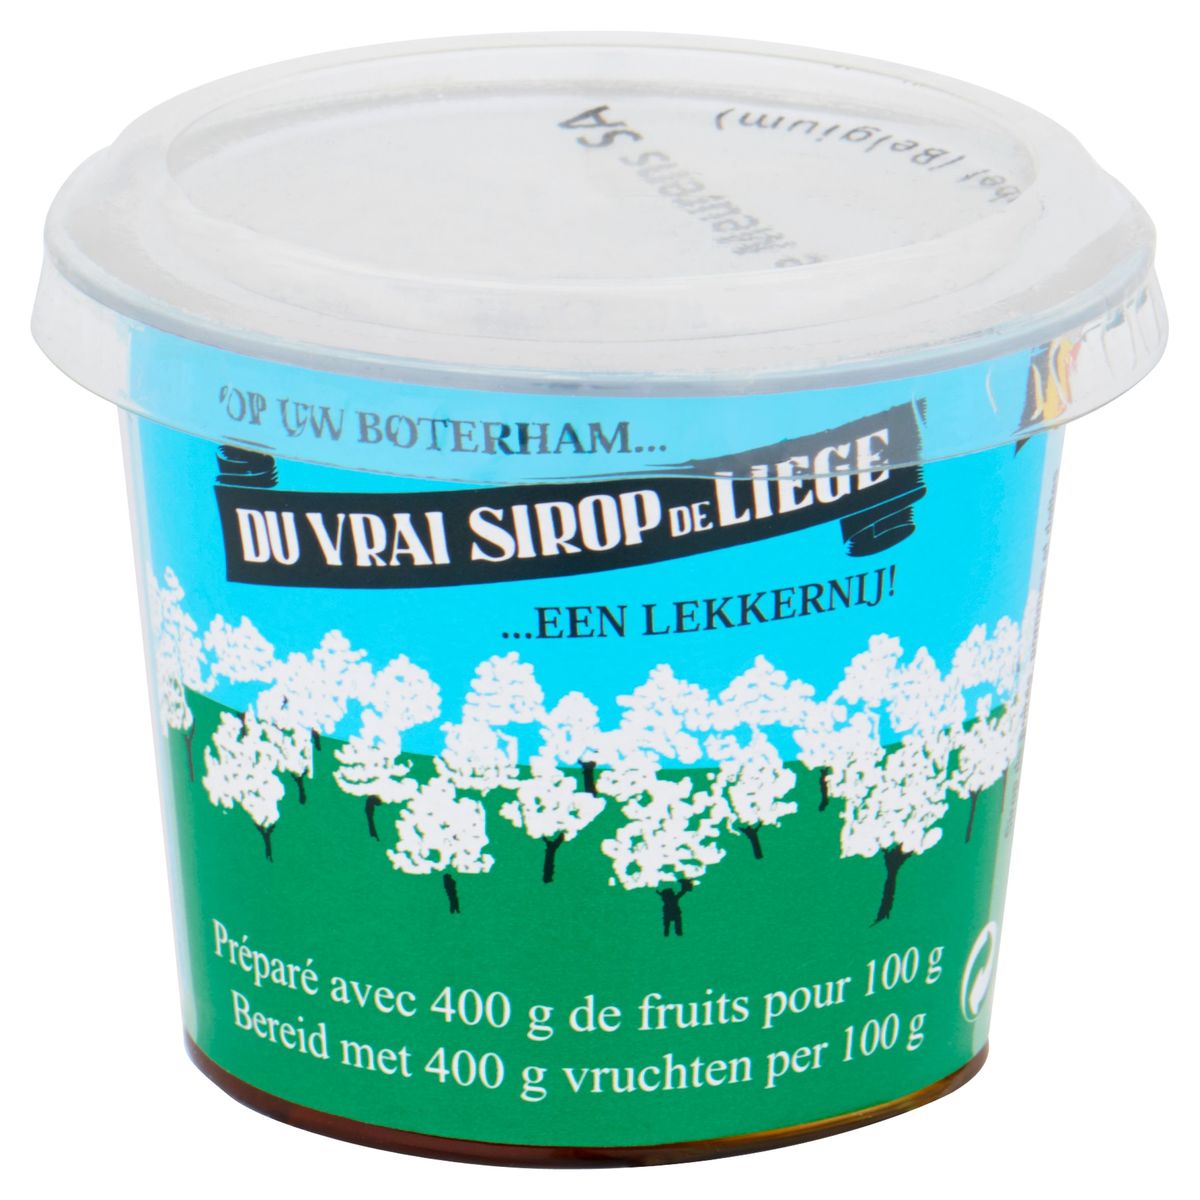 Buy Meurens Du Vrai Sirop de Liège - Box of 12 x 80 gr online